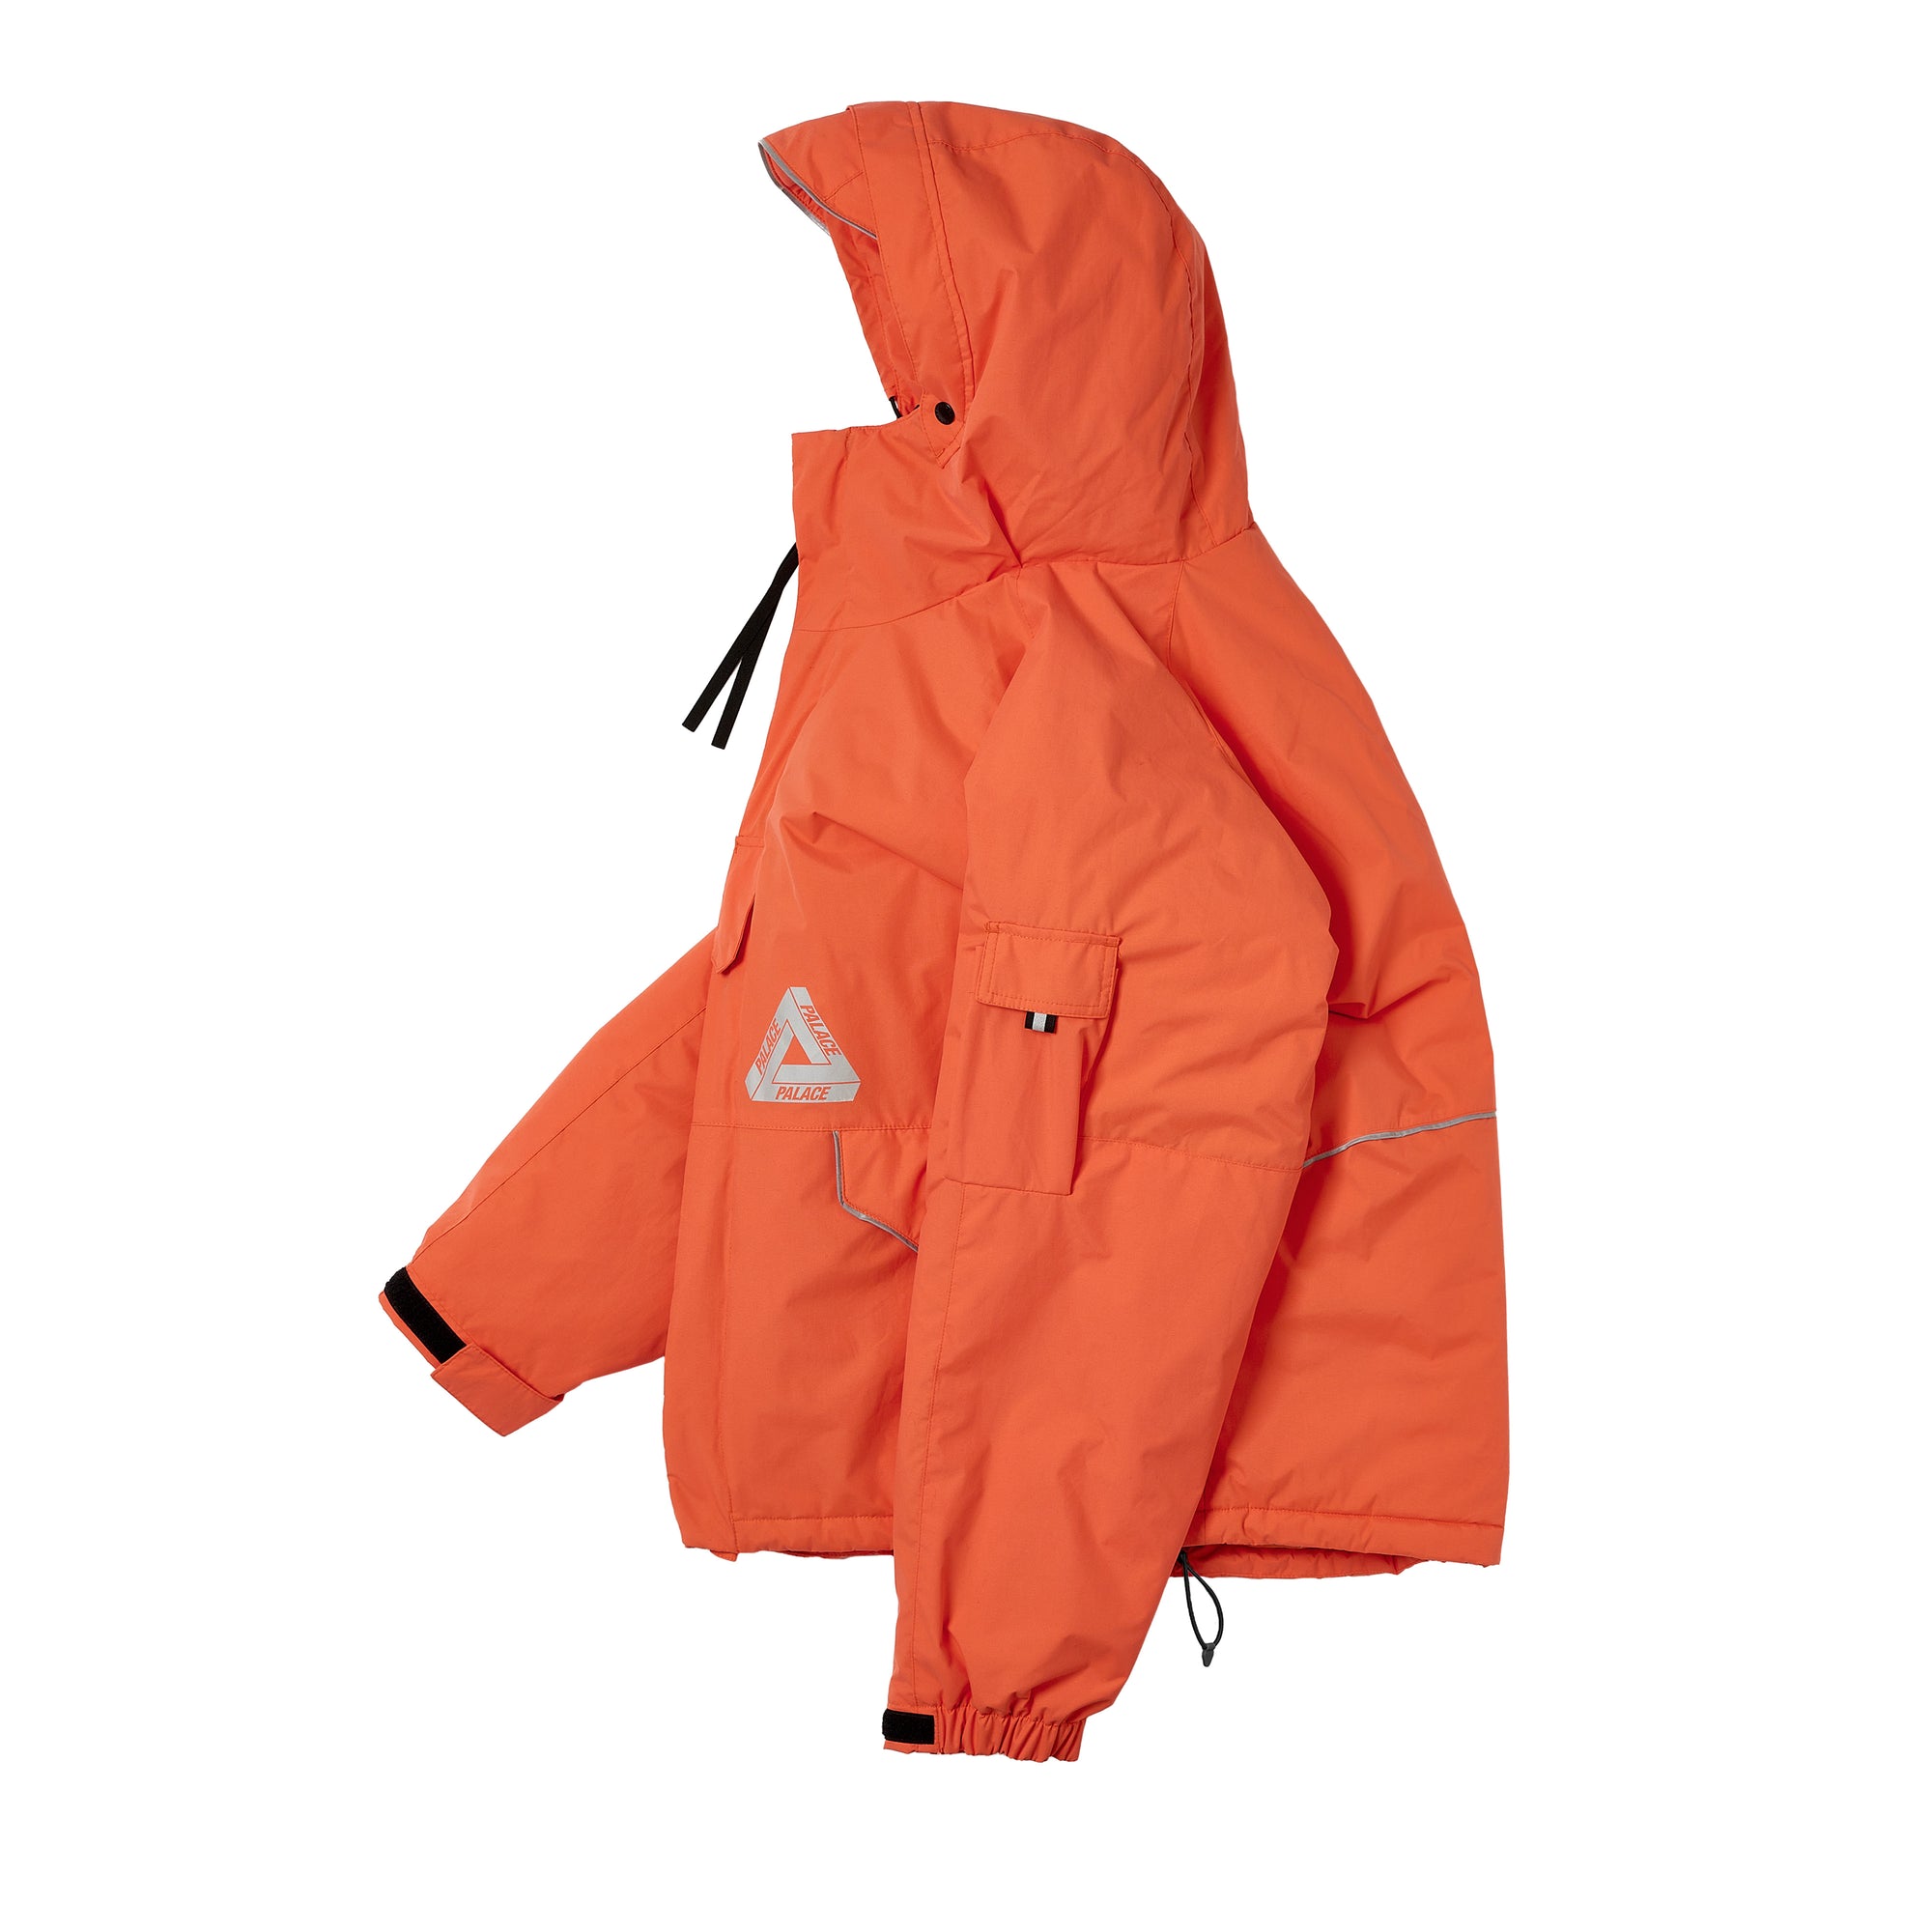 Palace - Men's P-Tech Hooded Jacket - (Orange) view 3